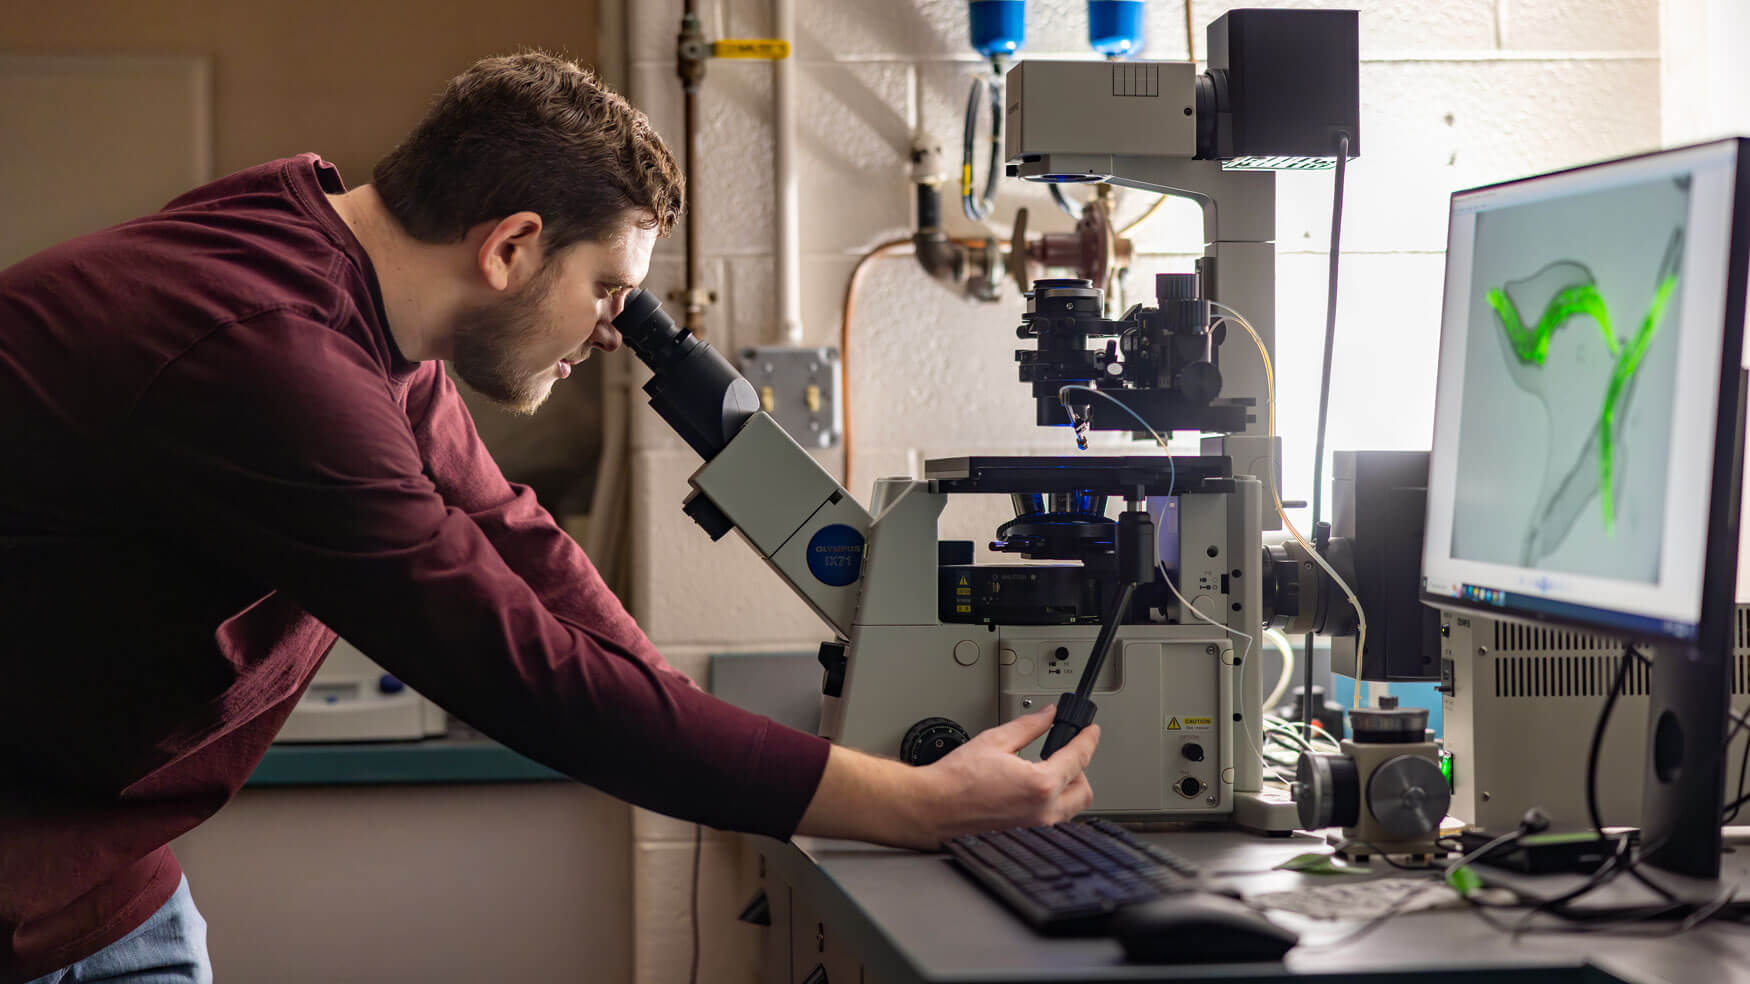 A student analyzing a specimen under a microscope